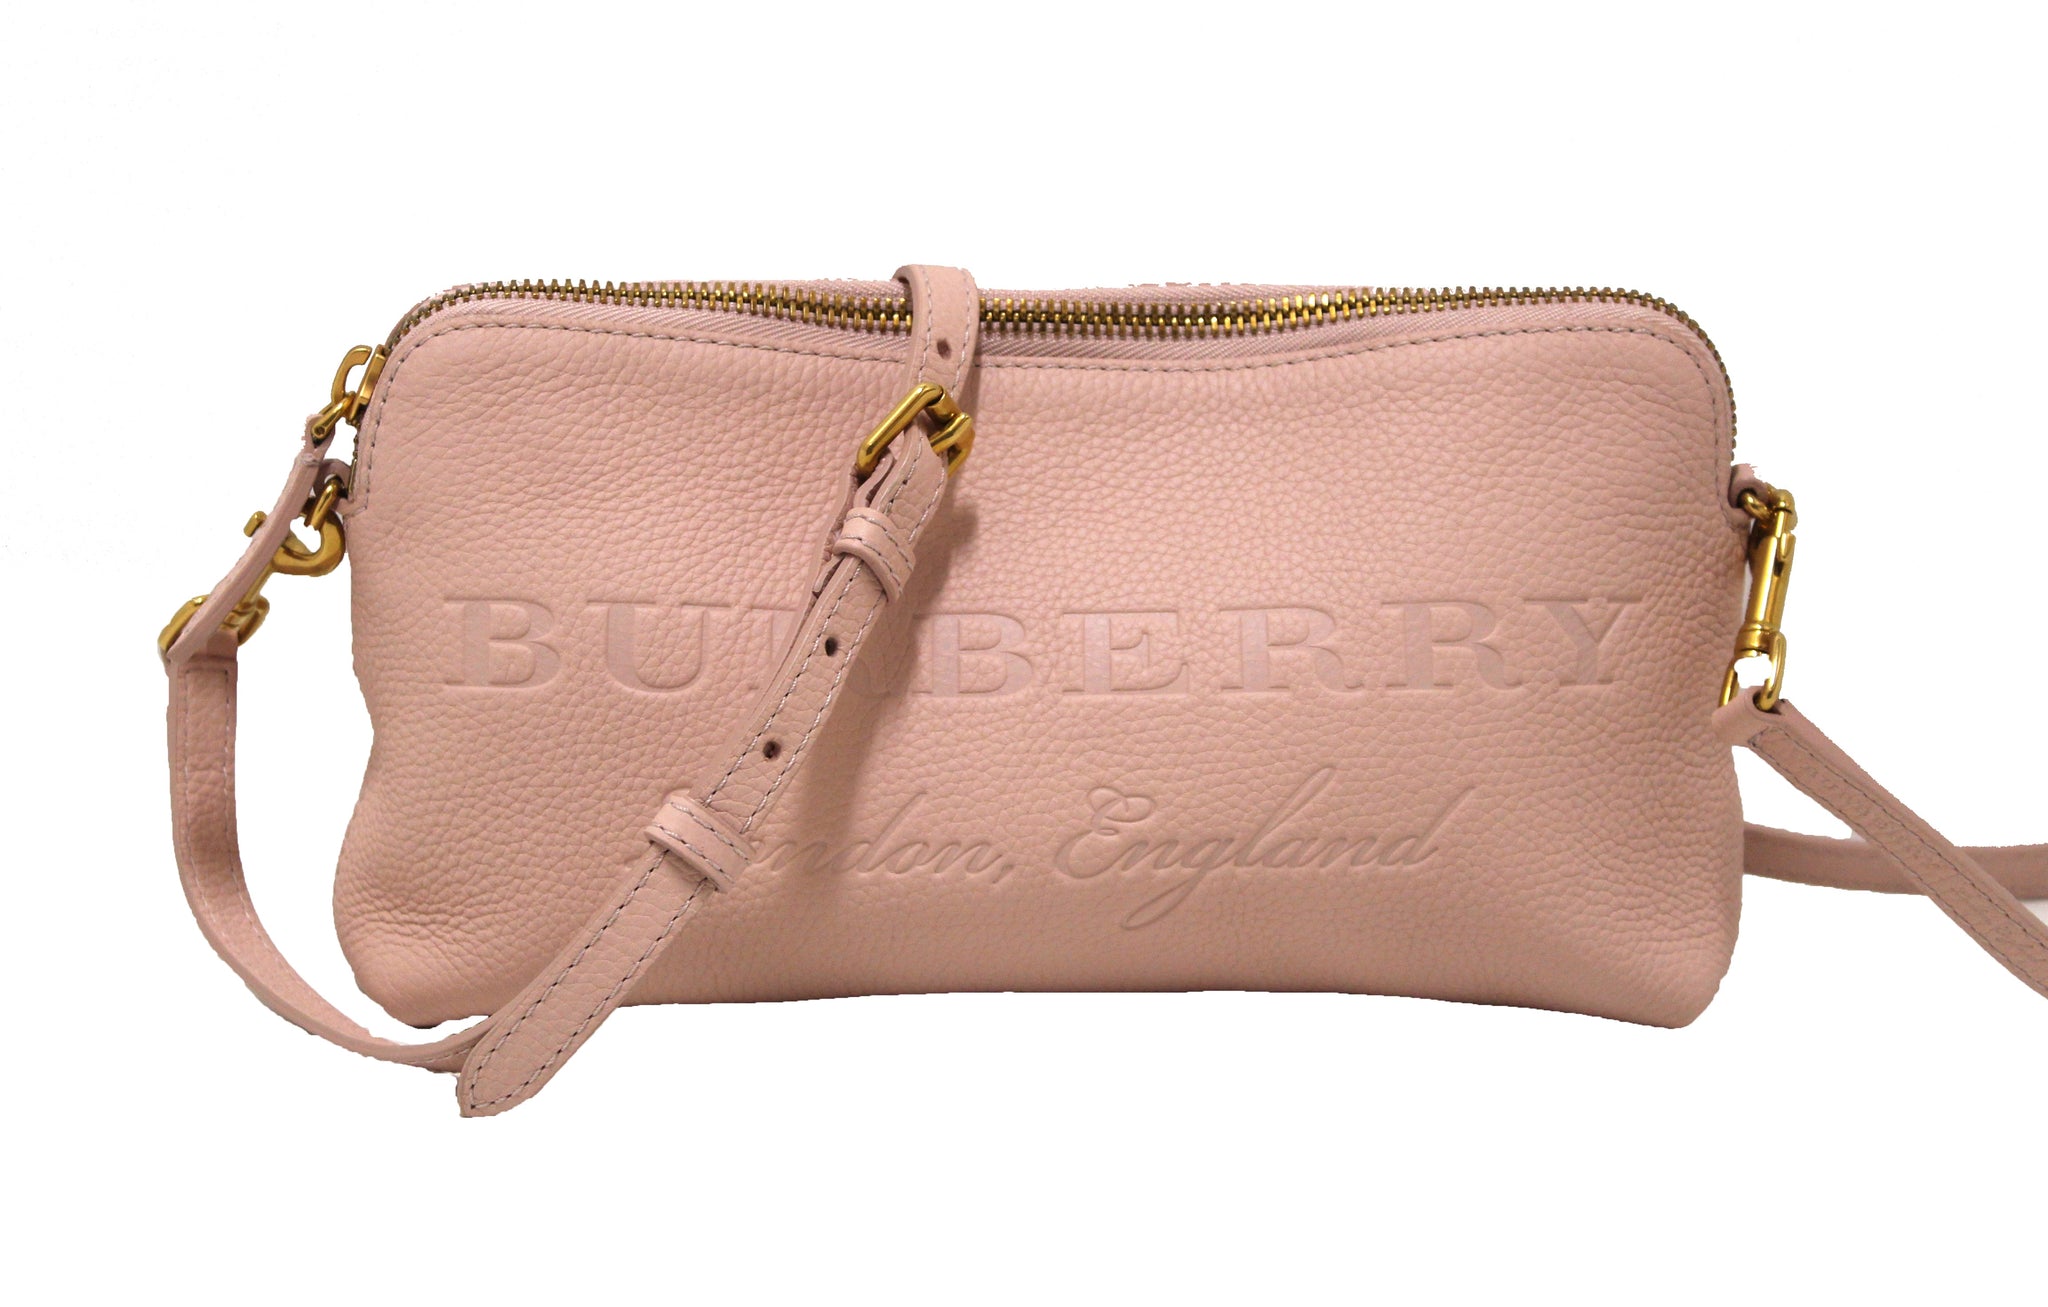 Burberry Crossbody Bag - Burberry Small Bag Pink